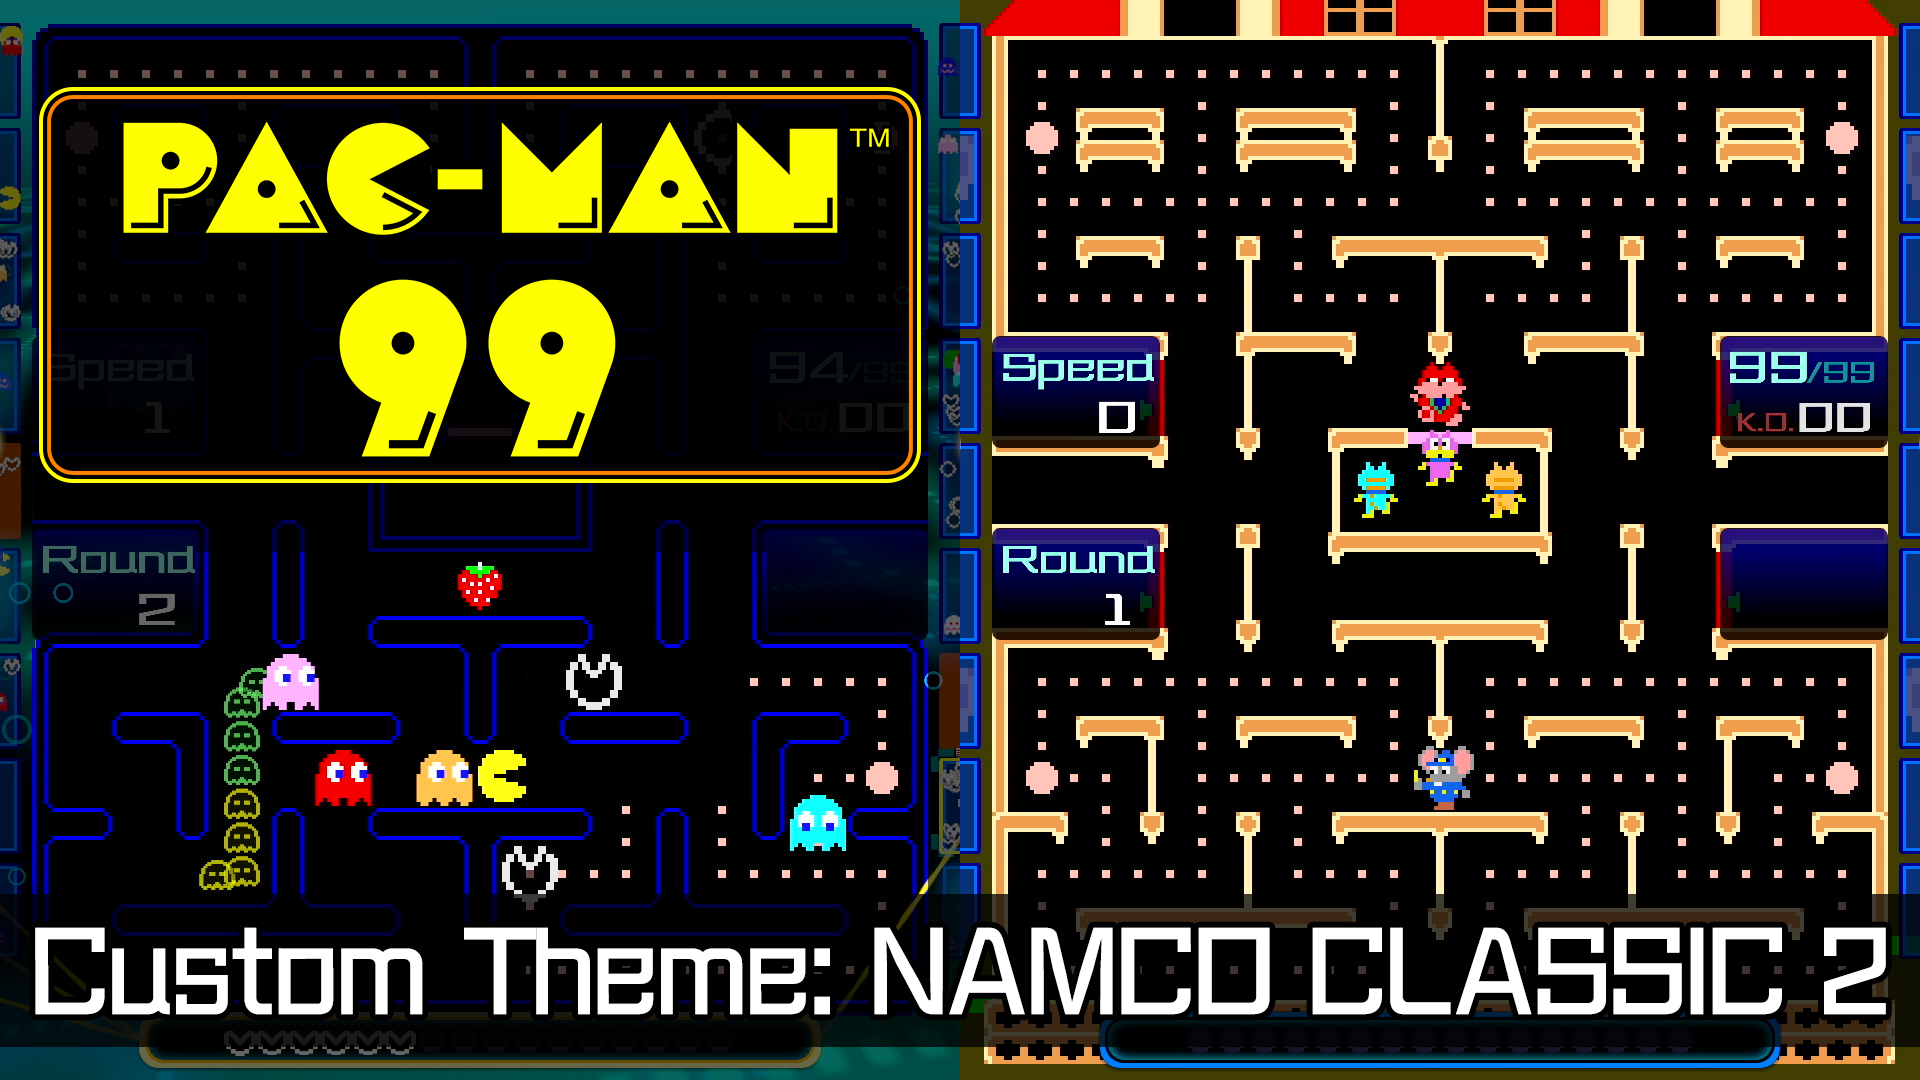 PAC-MAN 99 Custom Theme: NAMCO CLASSIC 2